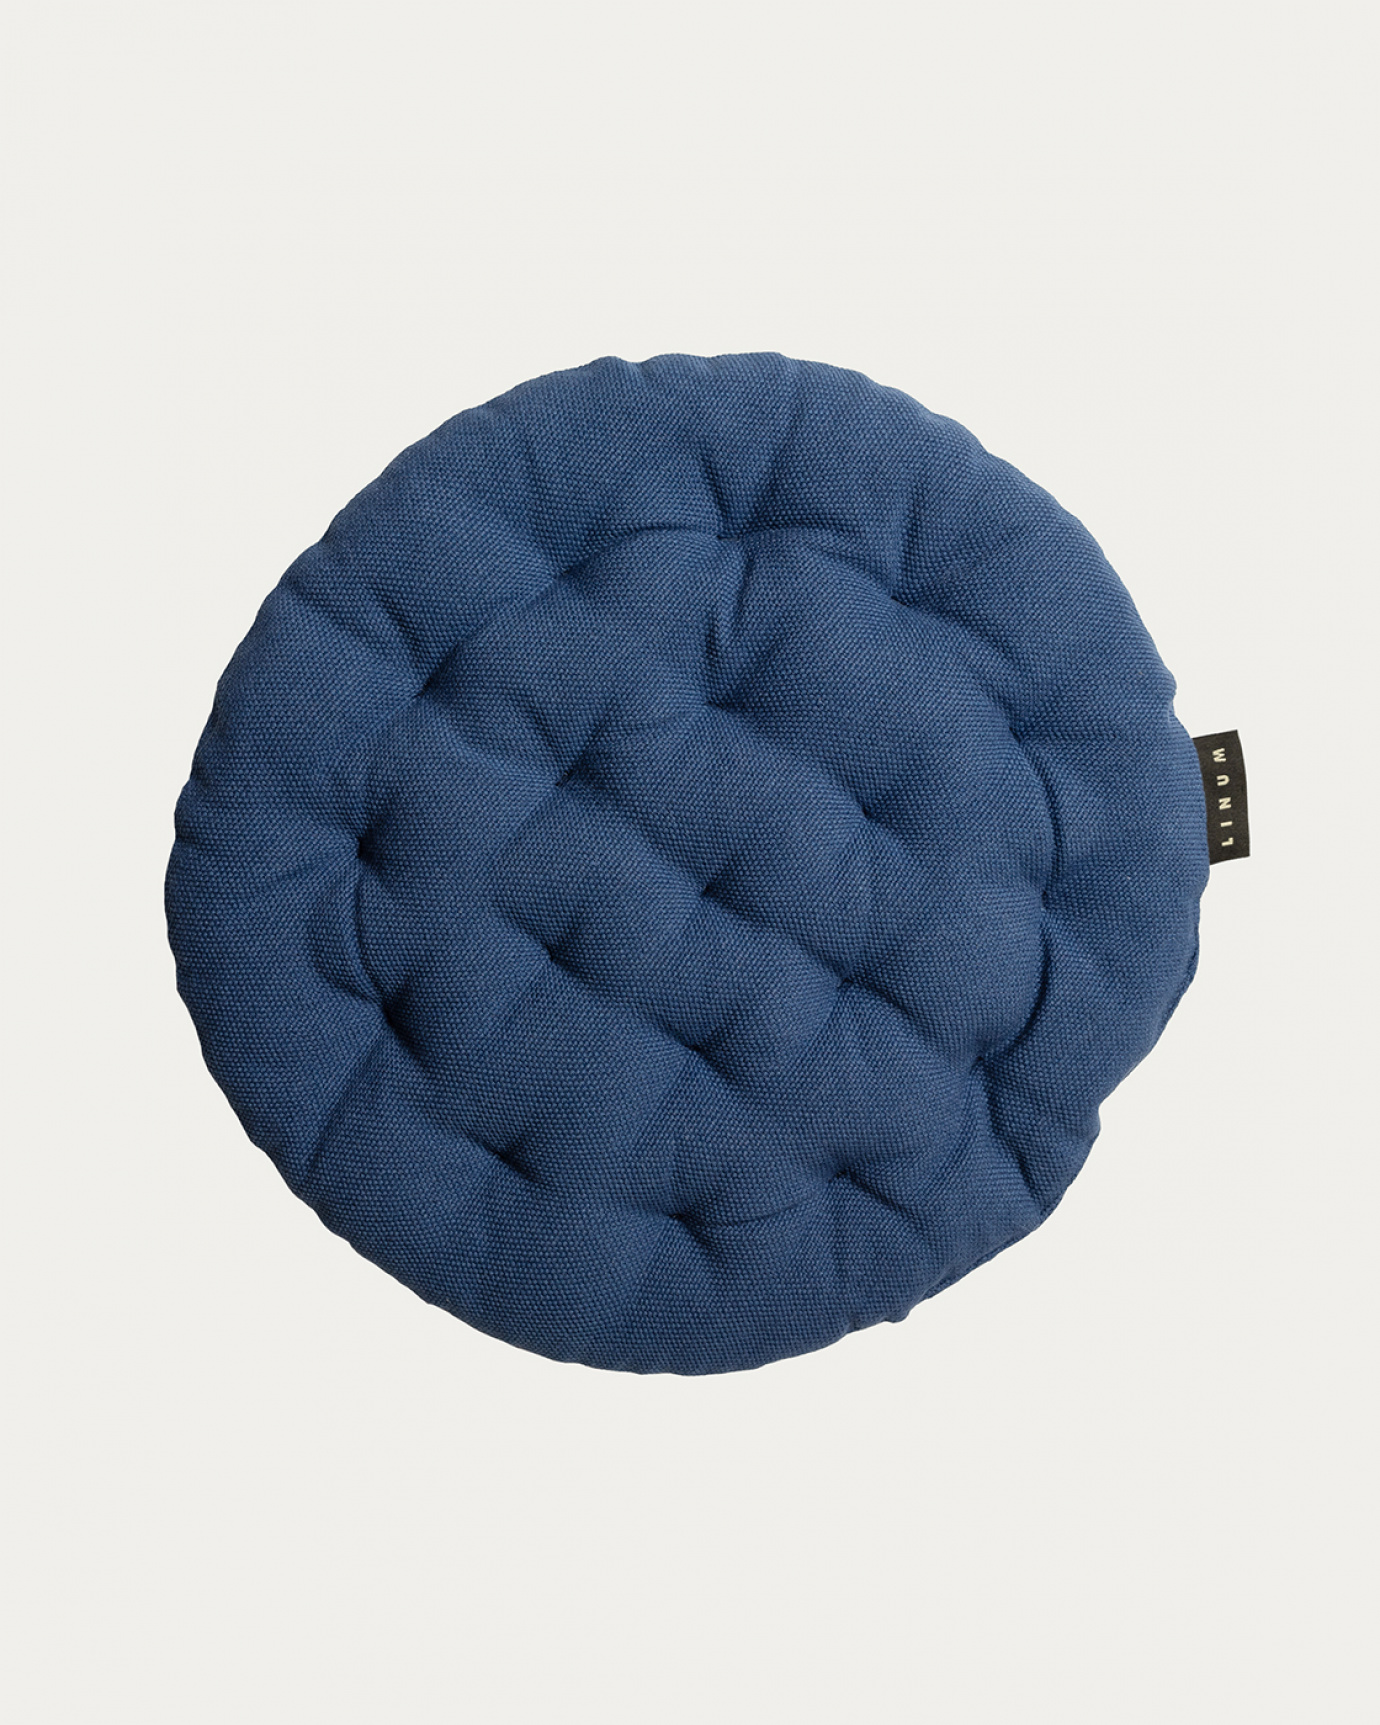 Immagine prodotto blu indaco PEPPER cuscini sedie di cotone con imbottitura in poliestere di LINUM DESIGN. Dimensioni ø37 cm.